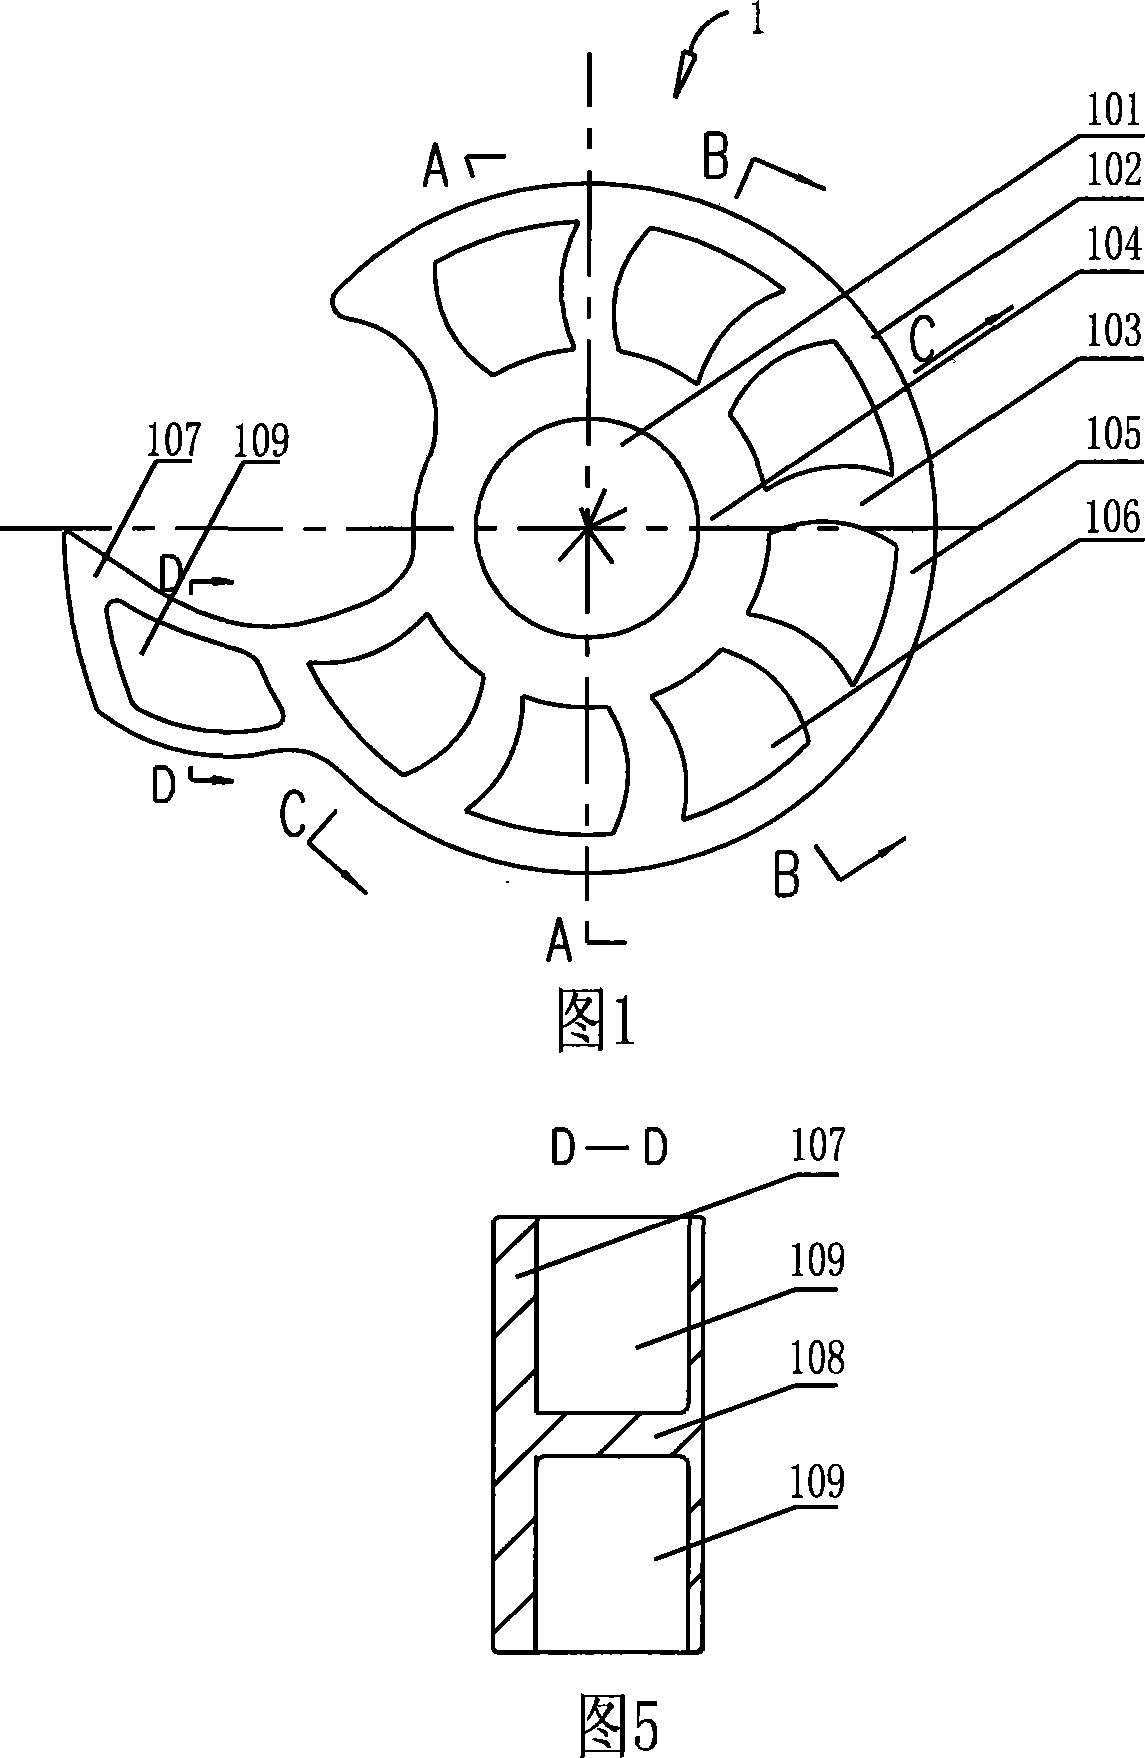 Pawl-type dry vacuum pump rotor